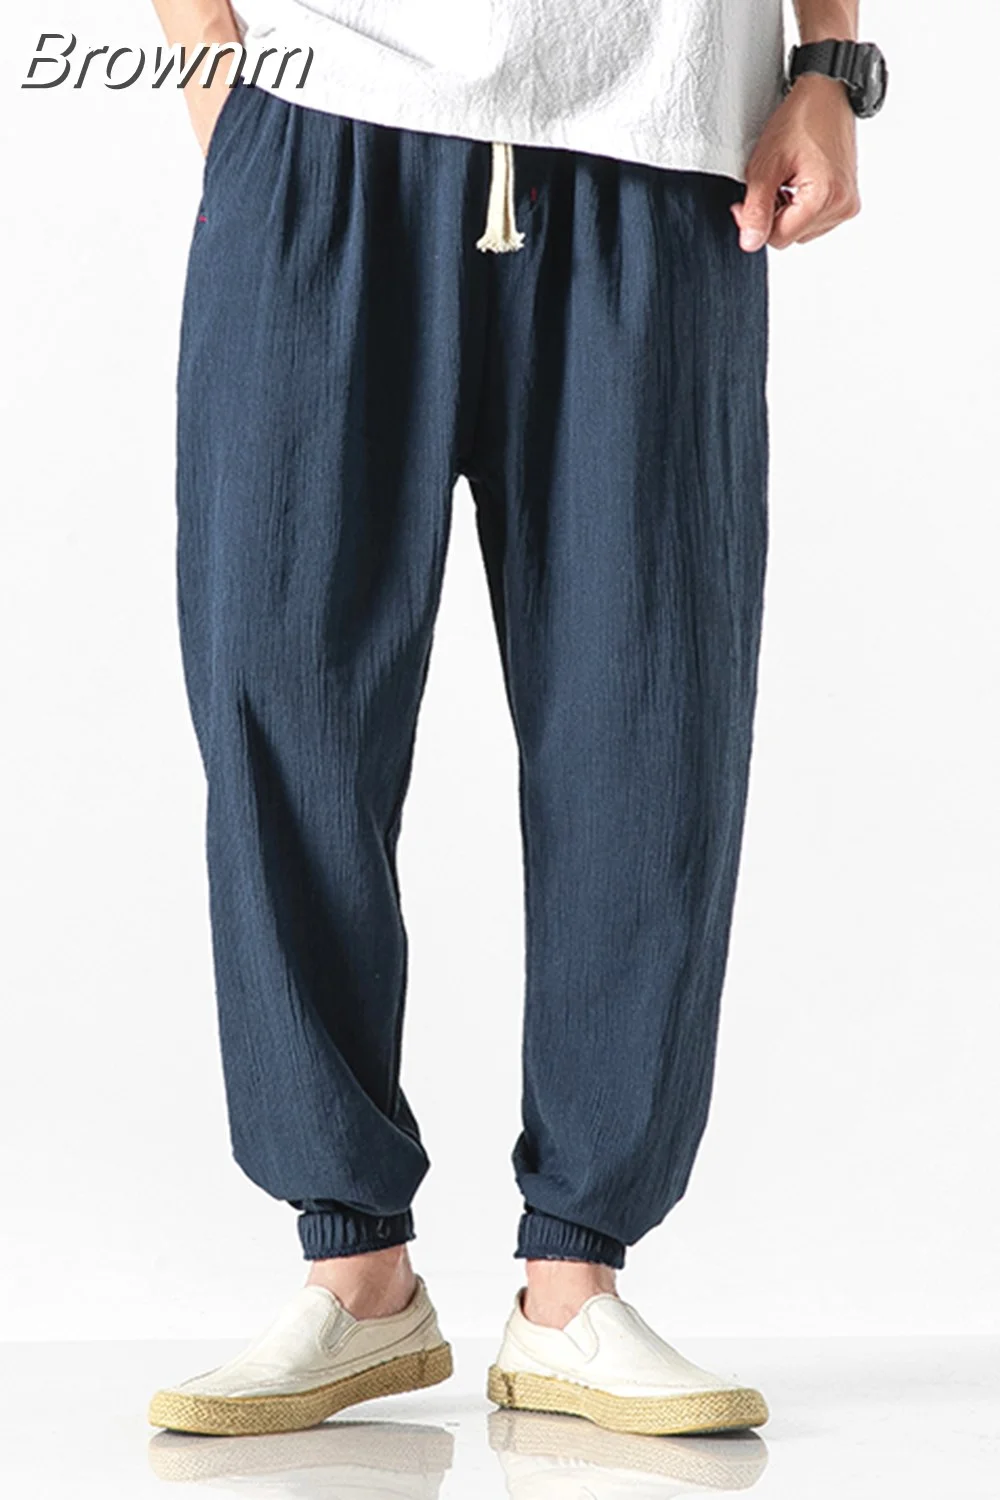 Brownm Summer Cotton Linen Harem Casual Pants Men Solid Color Slim Fit Harajuku Joggers Fashion Men's Clothing